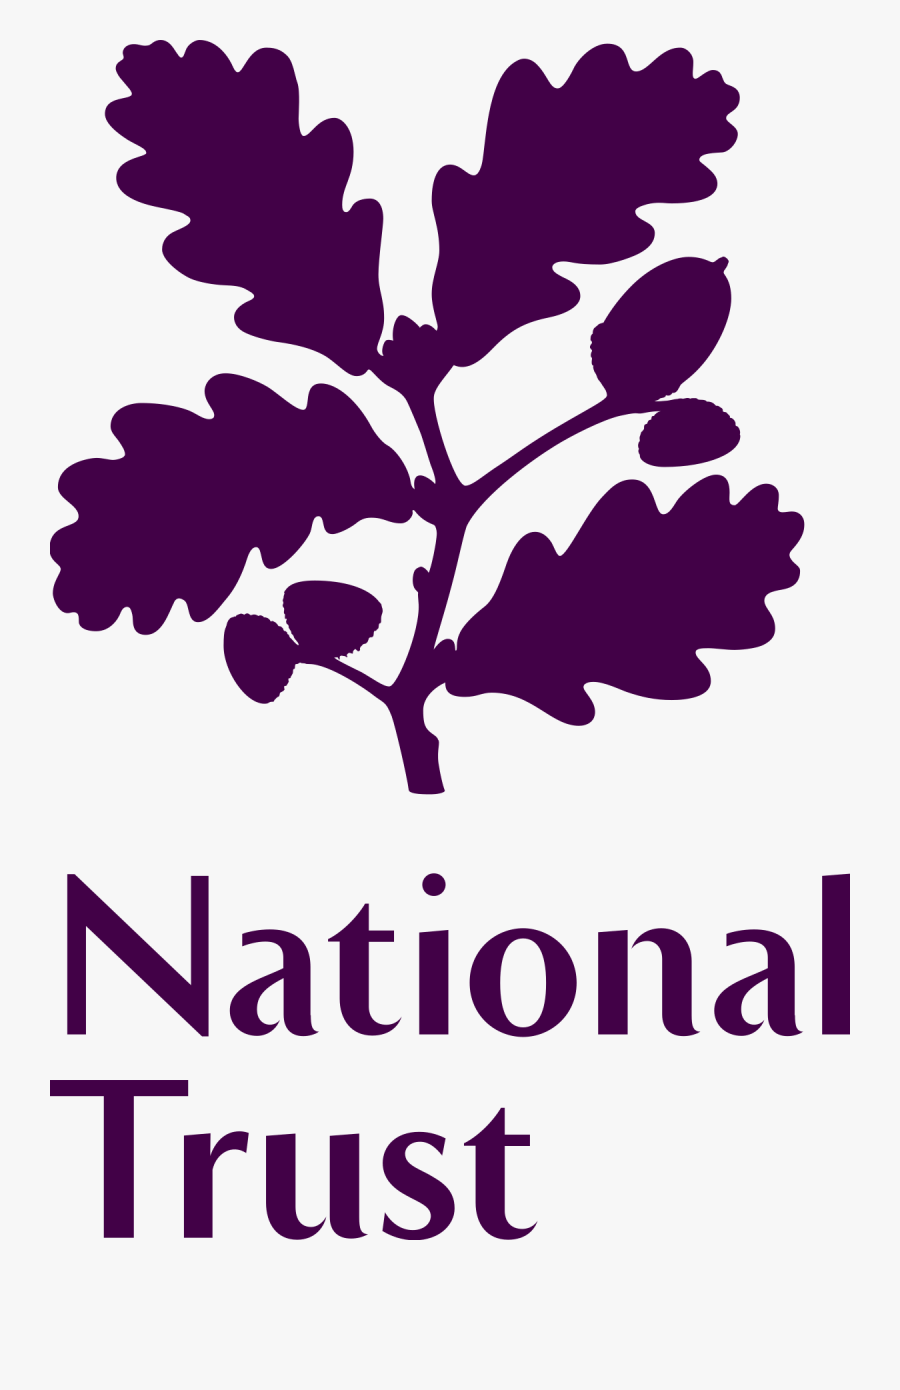 National Trust Logo Png, Transparent Clipart